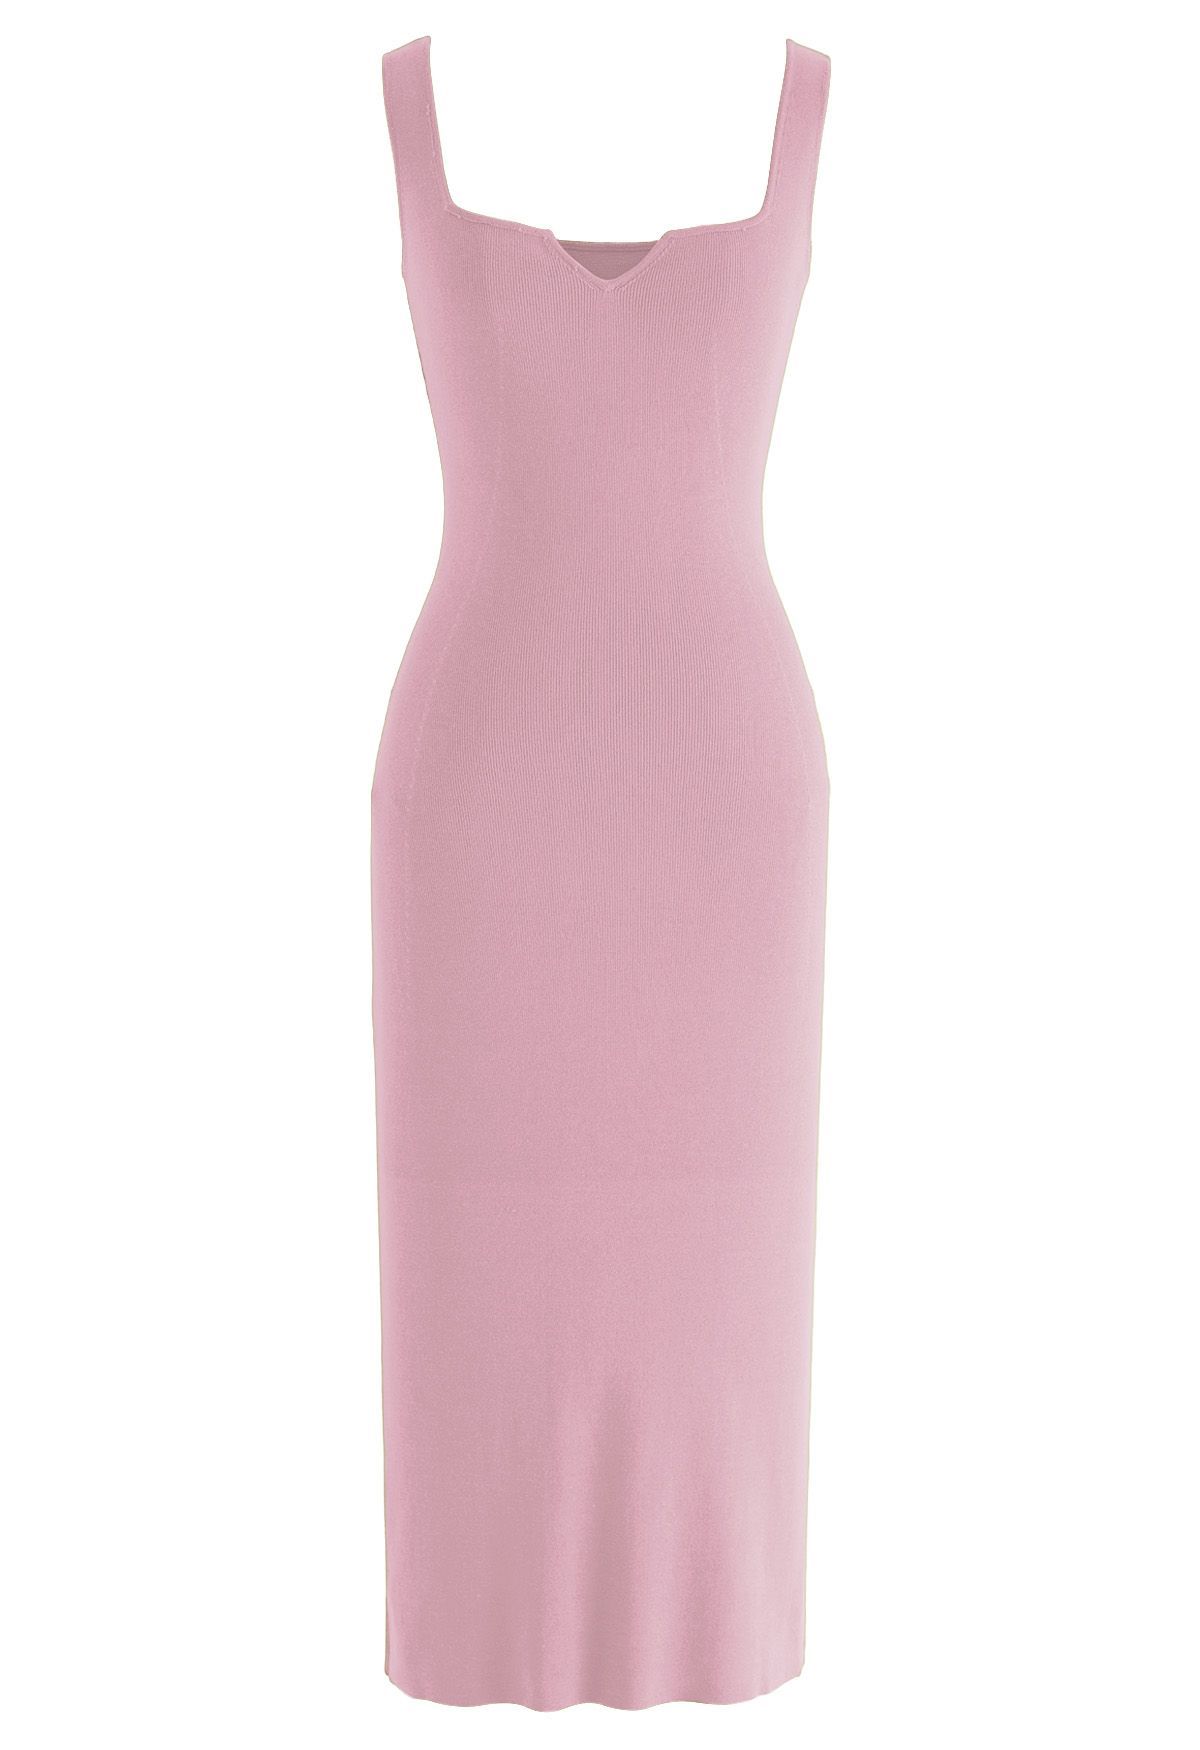 Notch Neckline Bodycon Knit Dress in Pink | Chicwish